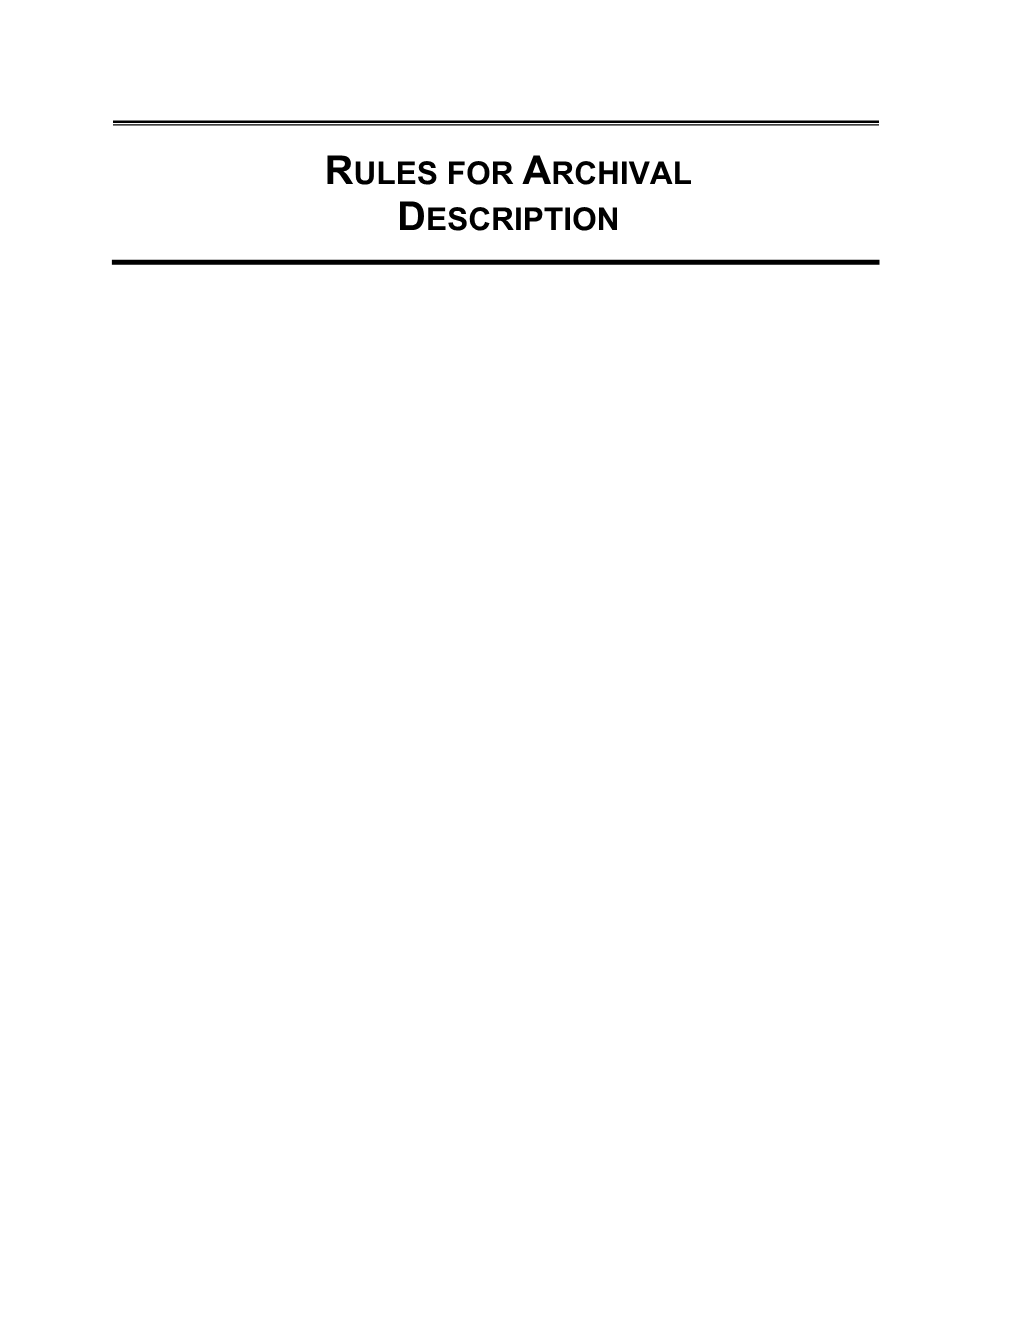 Rules for Archival Description